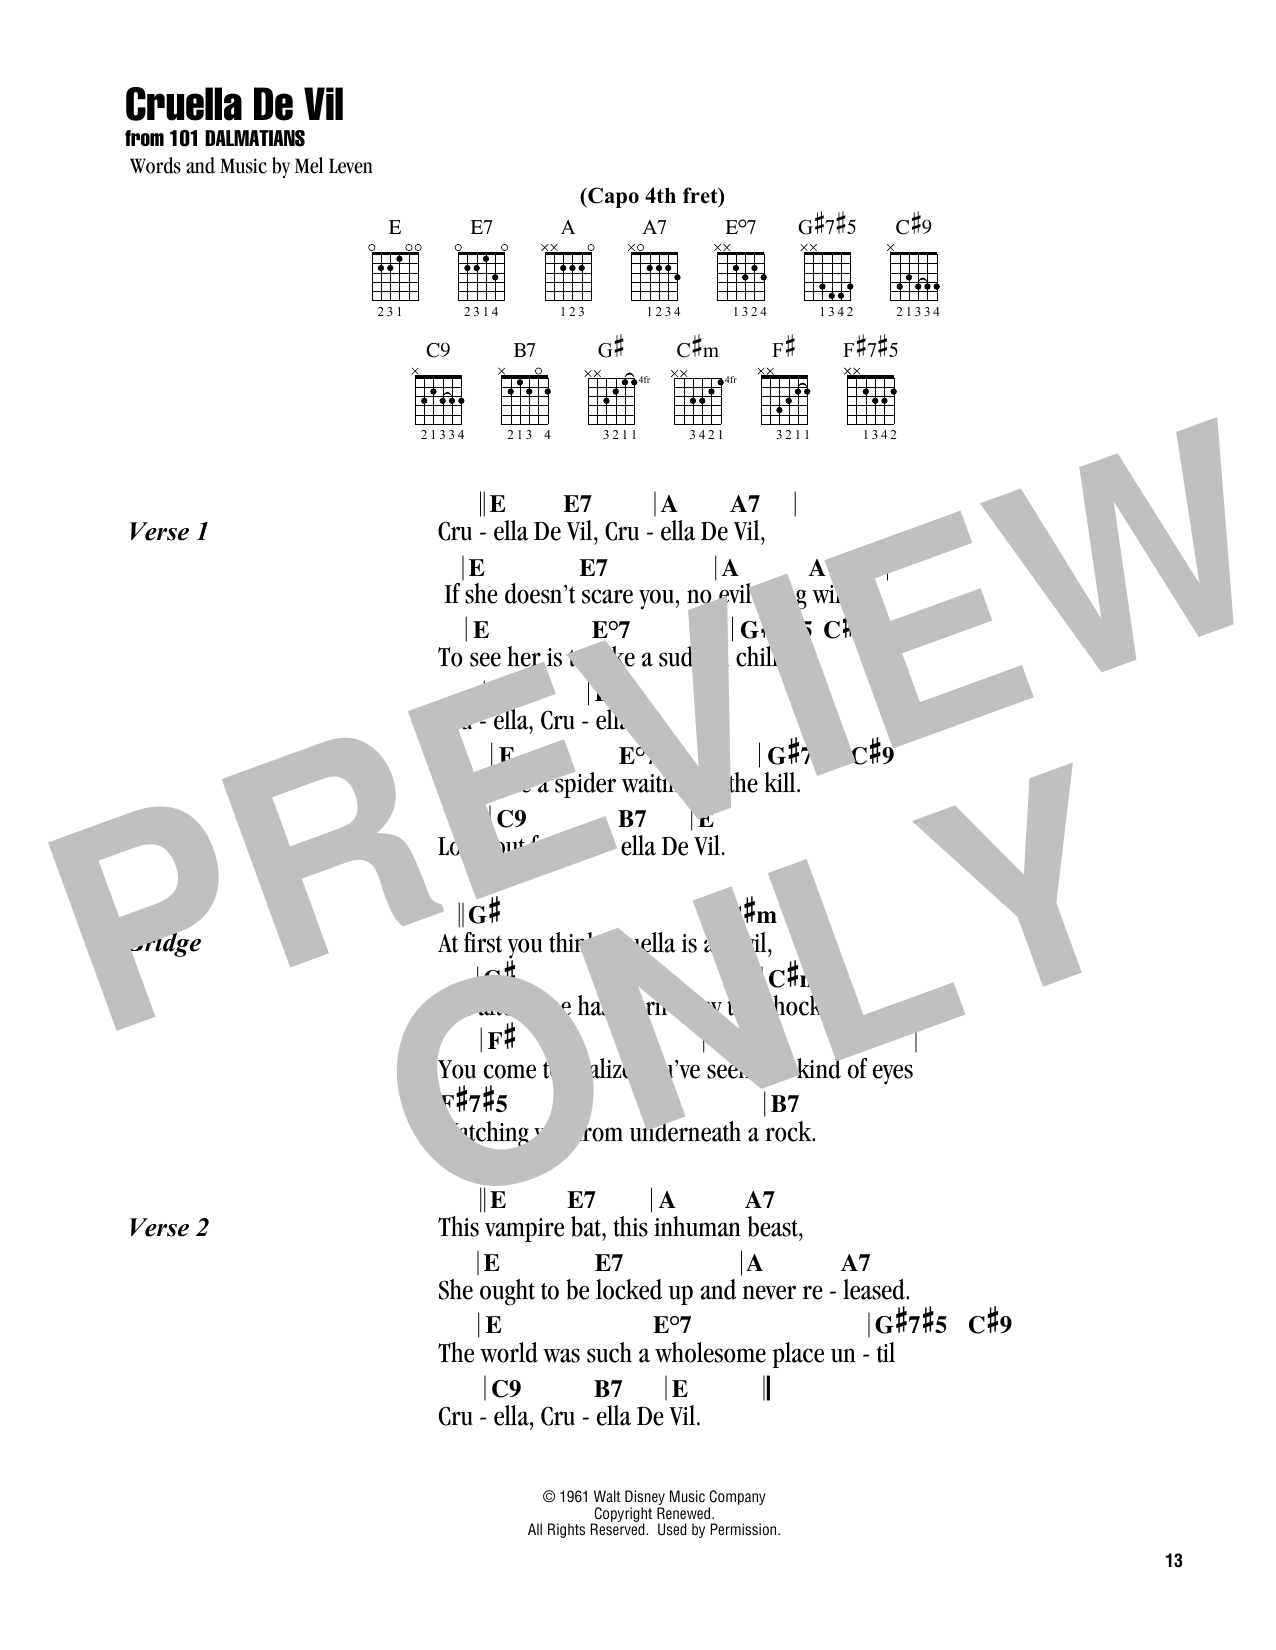 Mel Leven Cruella De Vil (from 101 Dalmatians) Sheet Music Notes & Chords for Guitar Chords/Lyrics - Download or Print PDF